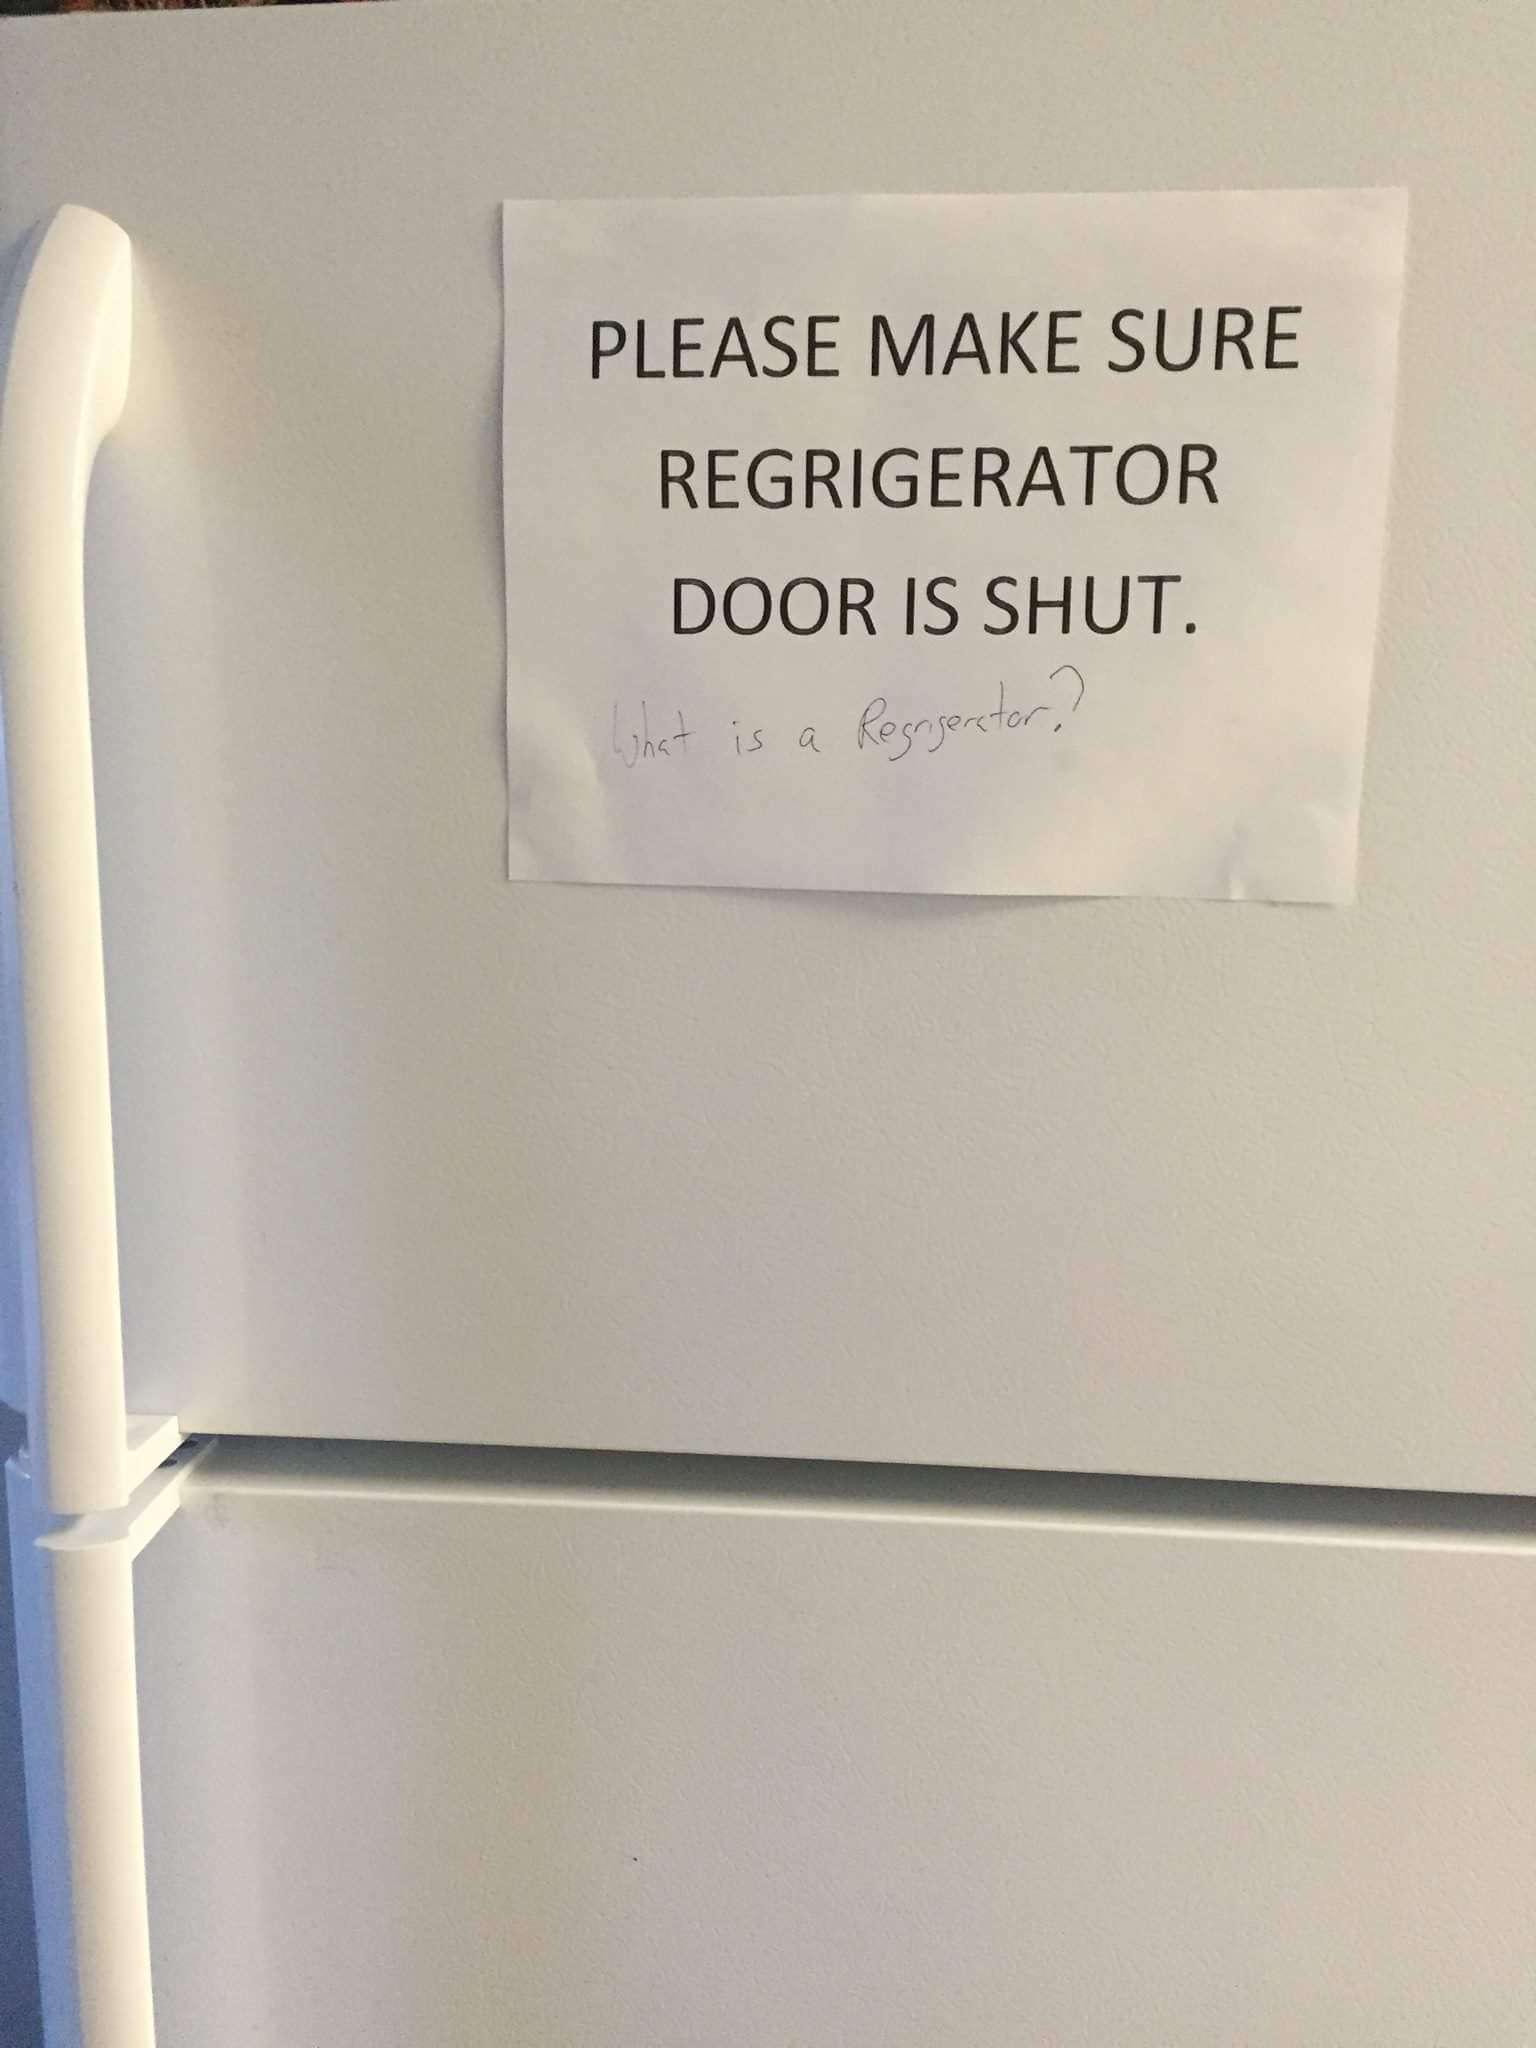 Please Make Sure Regrigerator Door Is Shut. What is a Regrigercter?